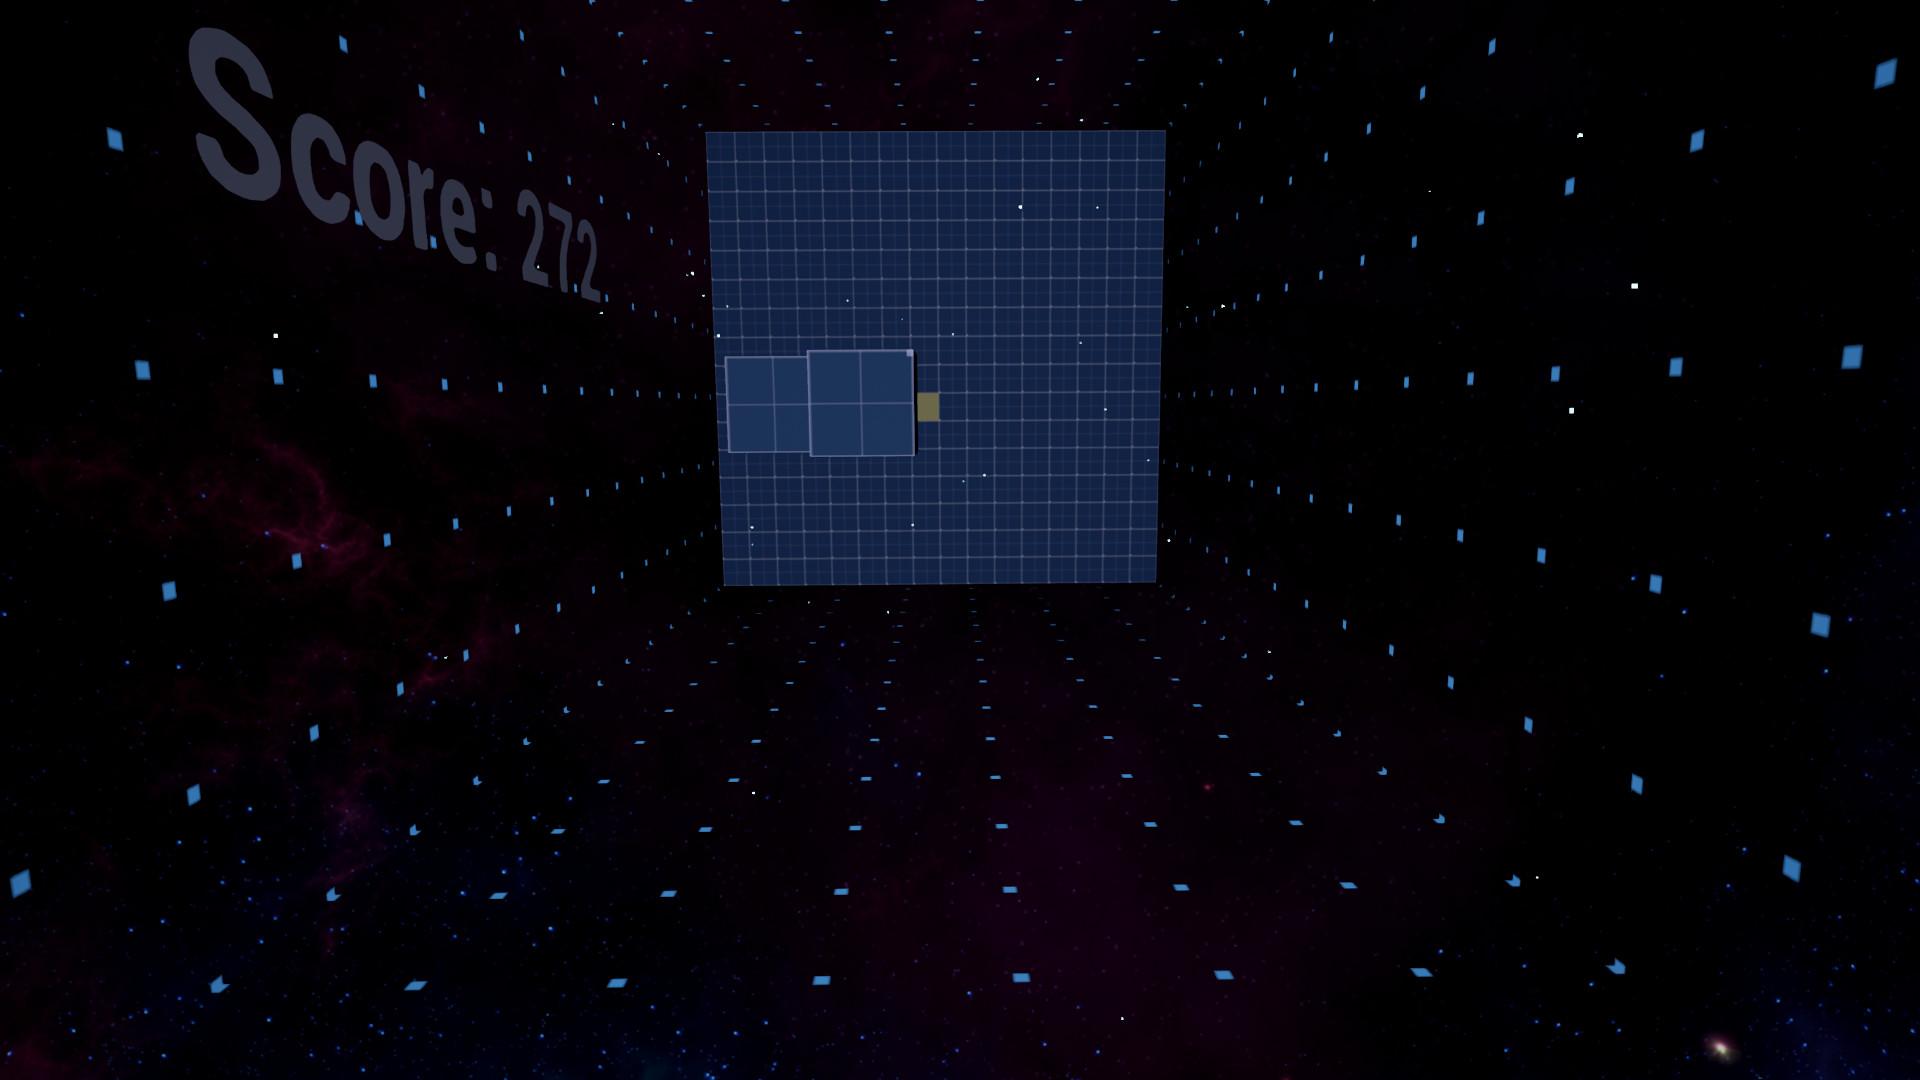 Screenshot №3 from game ThrounnelVR